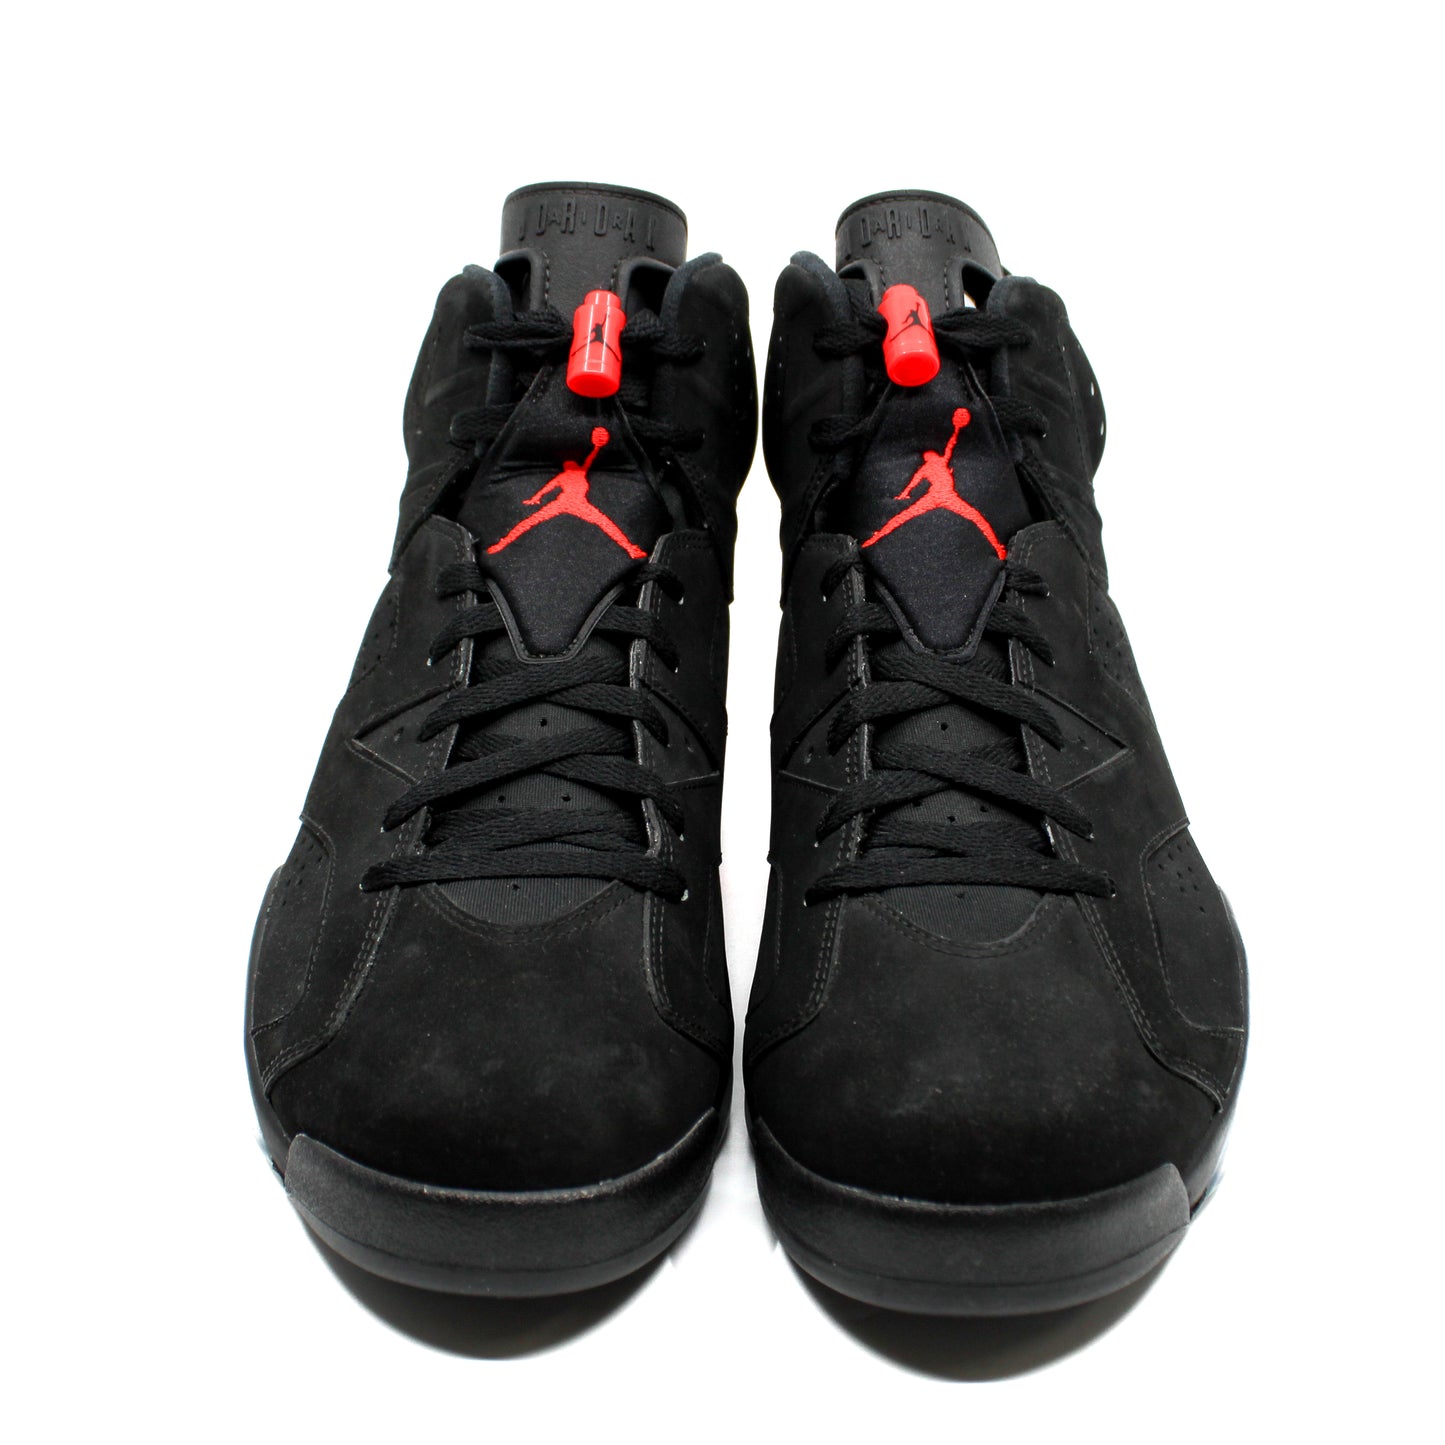 S1908 Air Jordan 6 Retro Infrared Black 2014 384664-060 (6).jpg